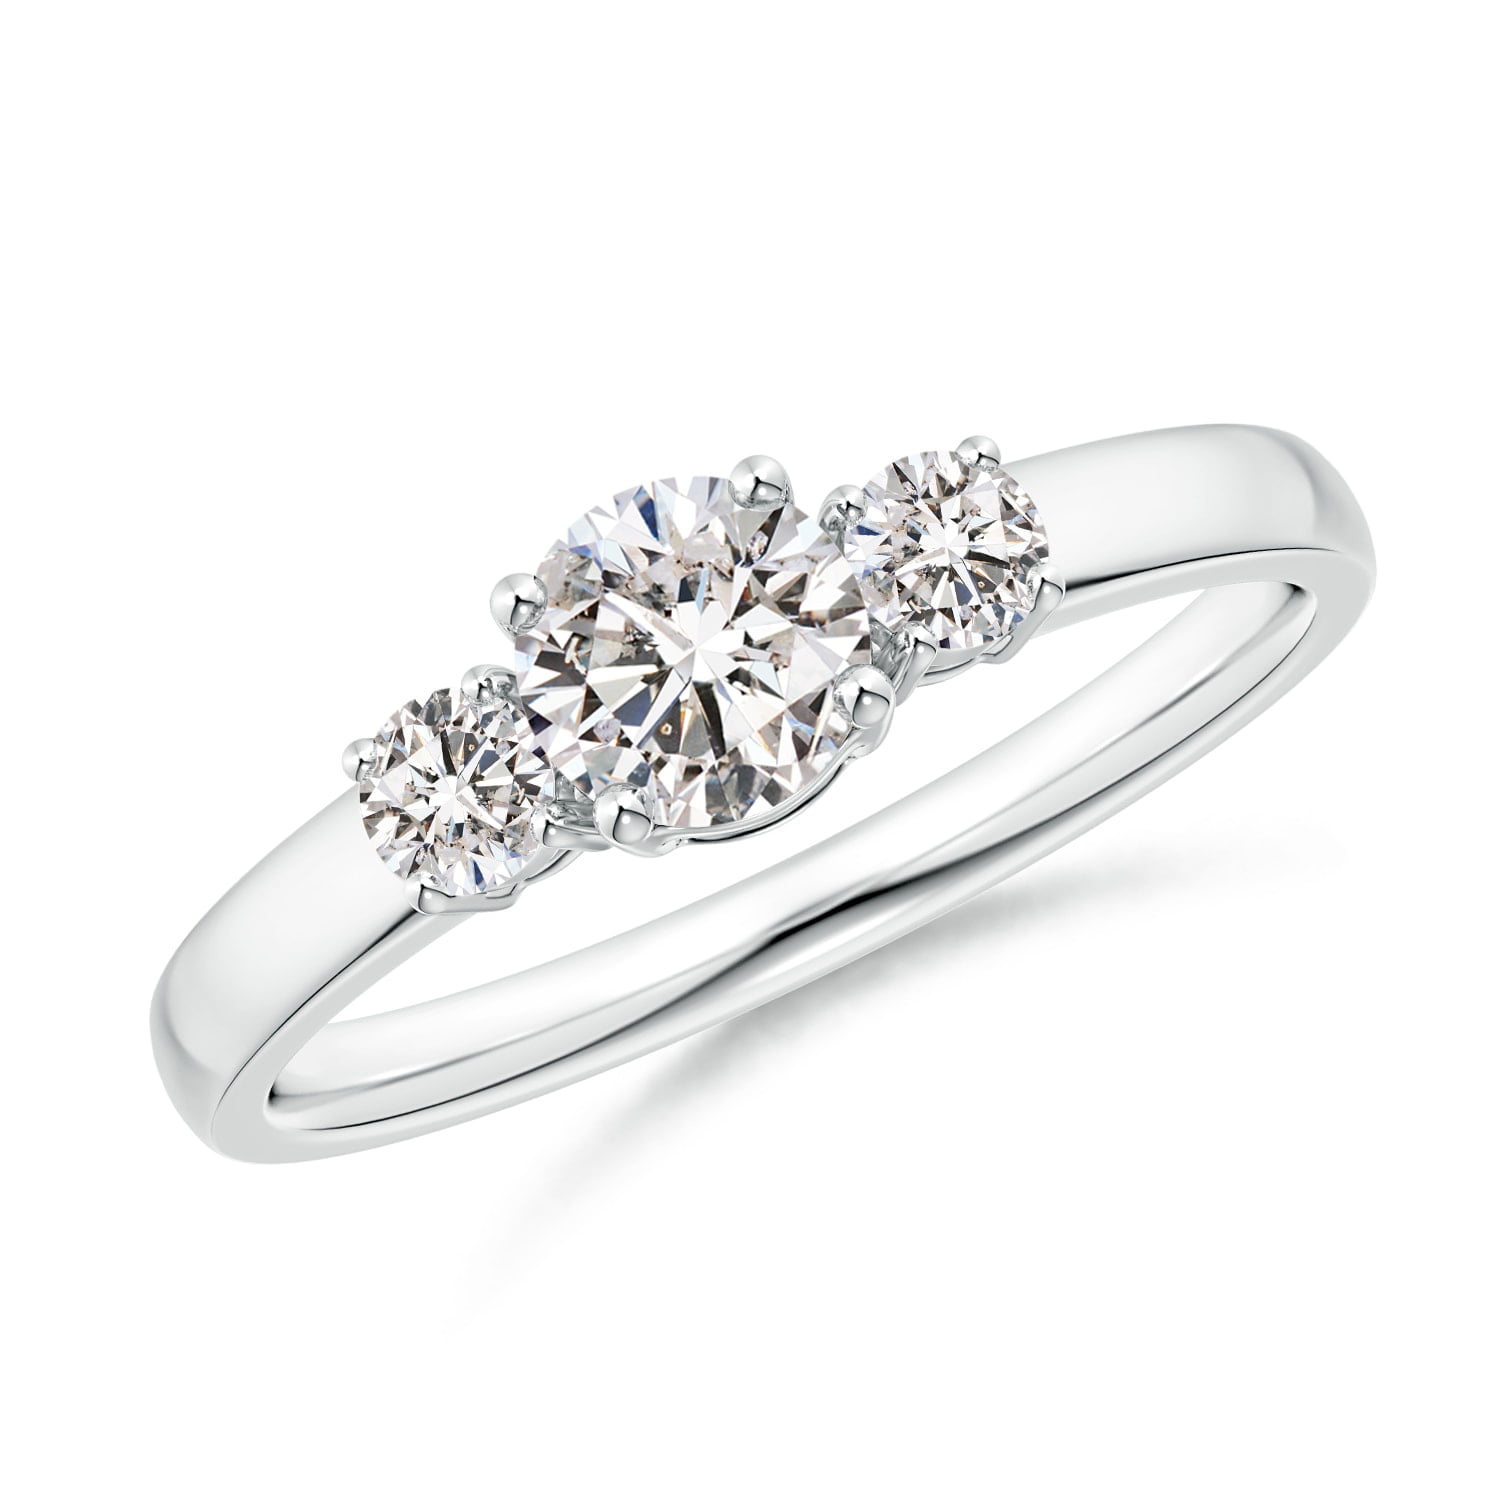 Round White Topaz Three-Stone Wedding Ring Silver Engagement Jewelry Sz 5-9 